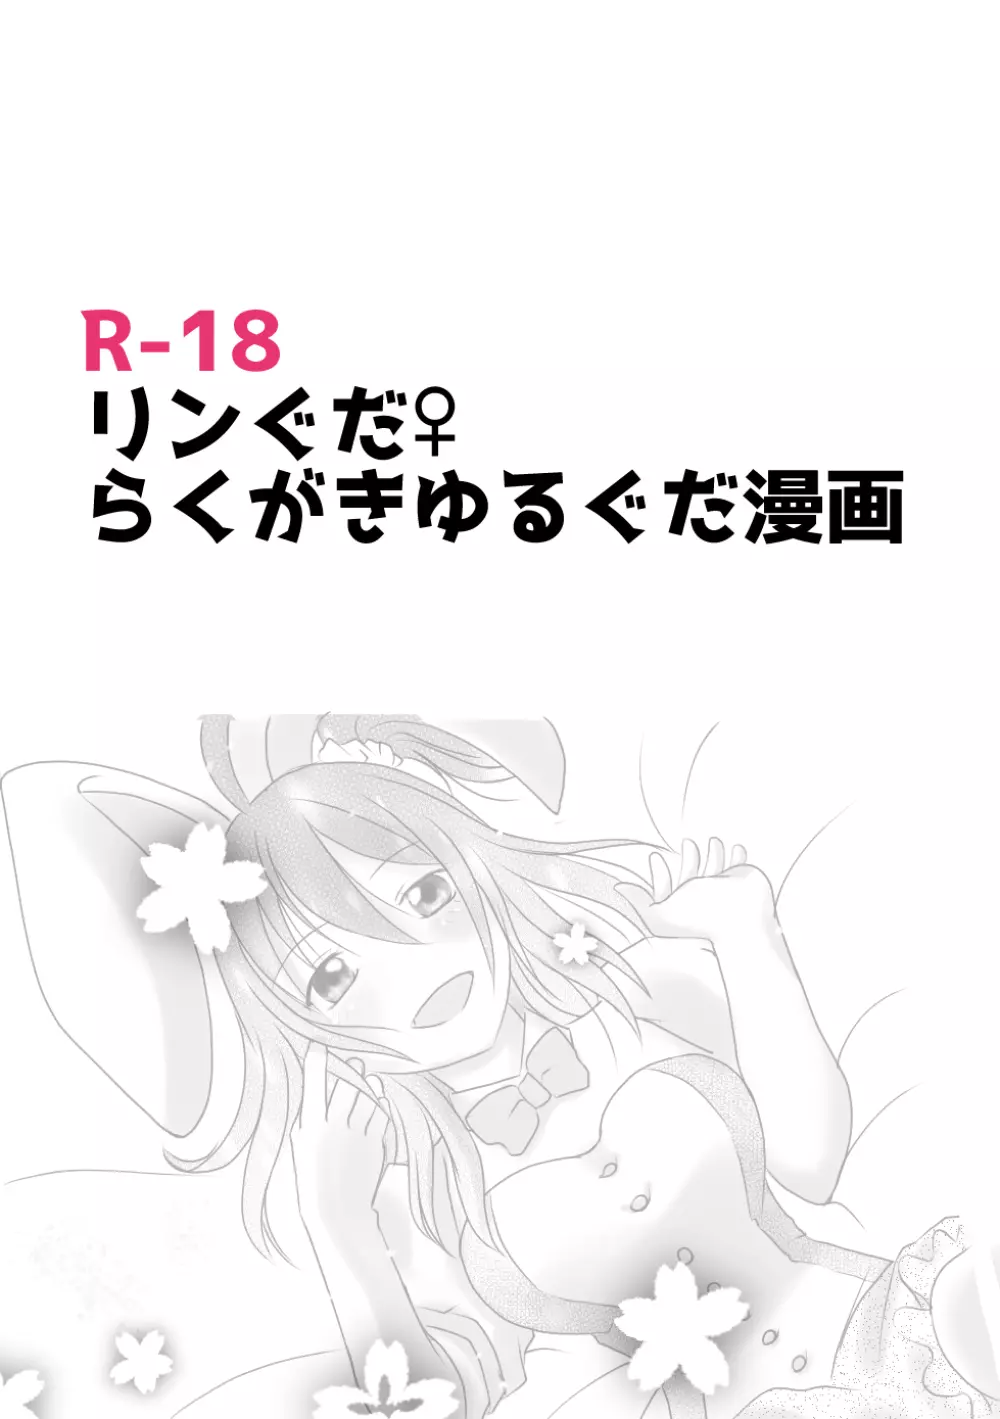 ] Rin guda ♀ rakugaki guda yuru manga(Fate/Grand Order] - page1